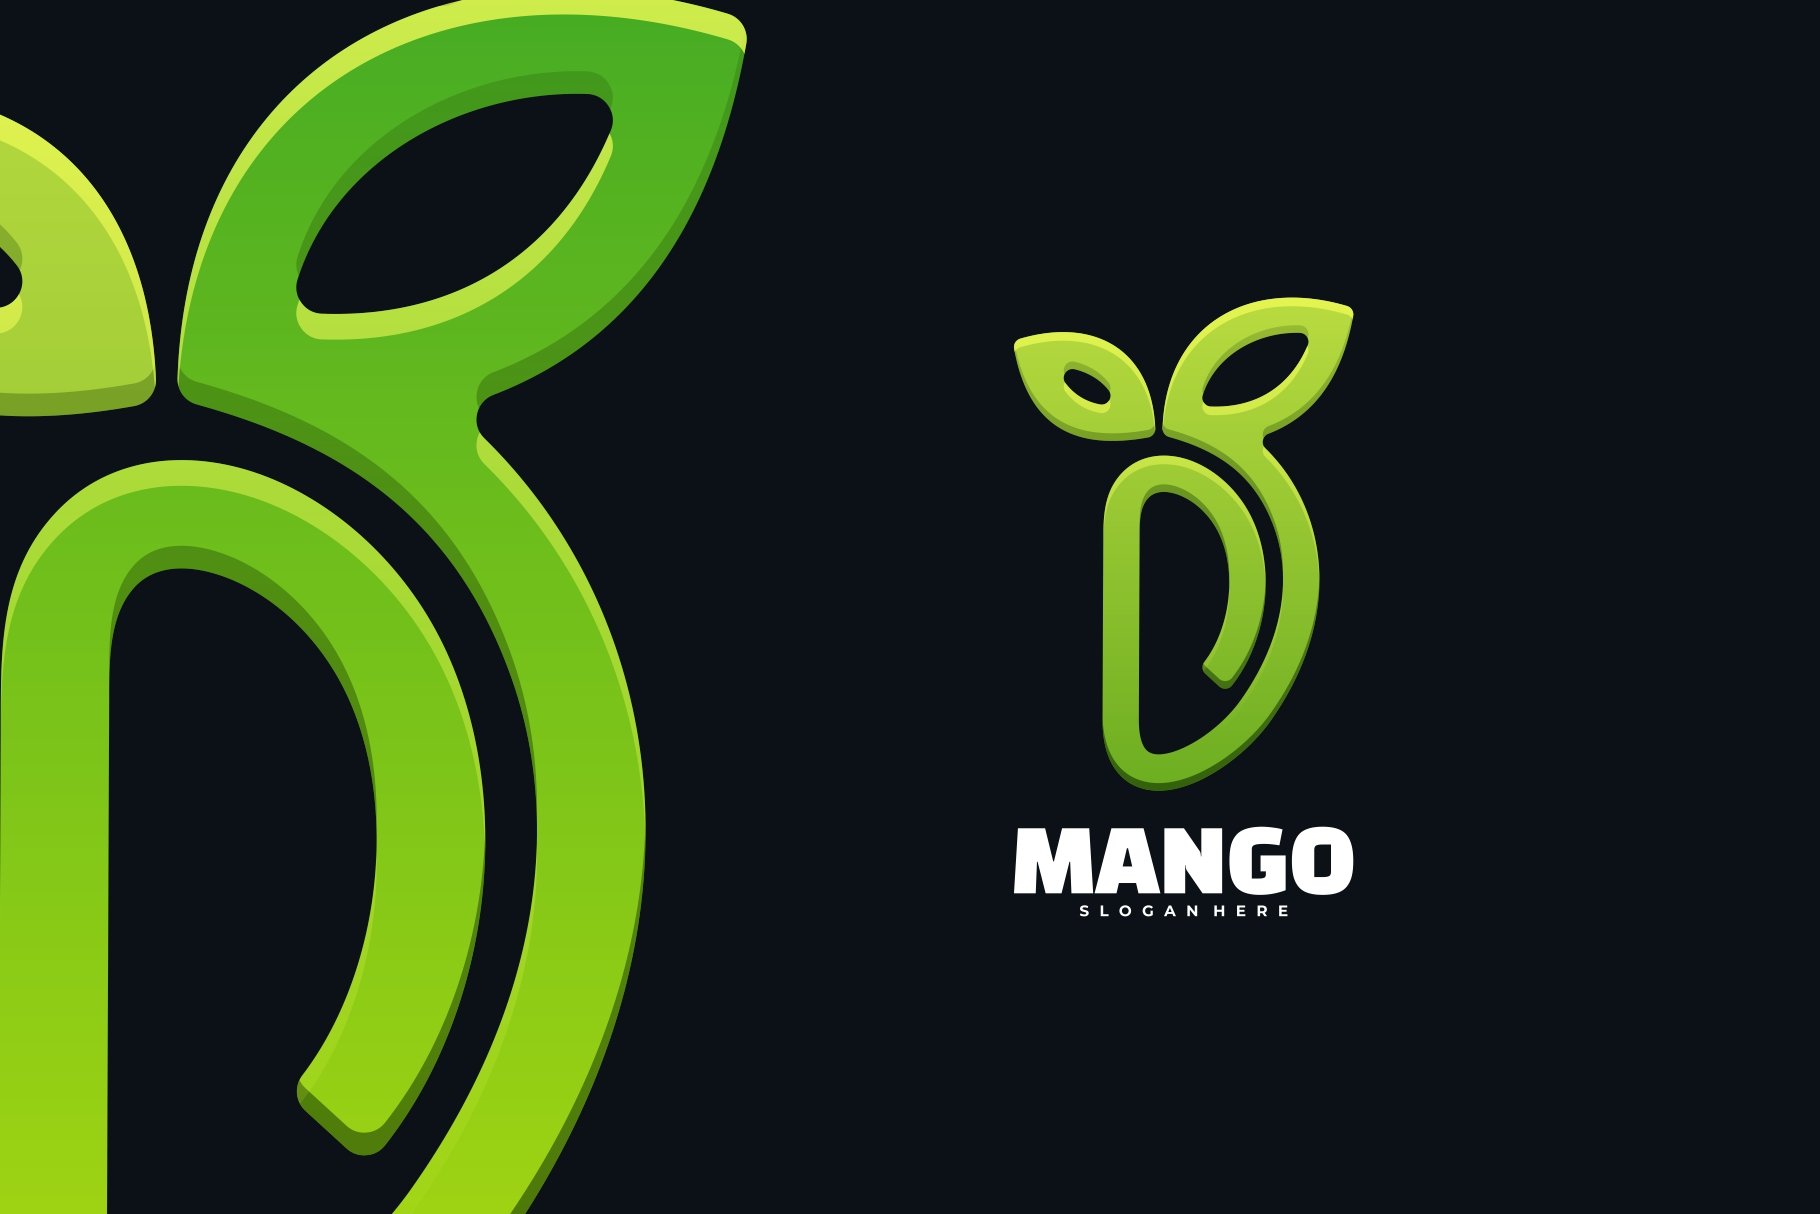 Mango Gradient Line Art Logo cover image.